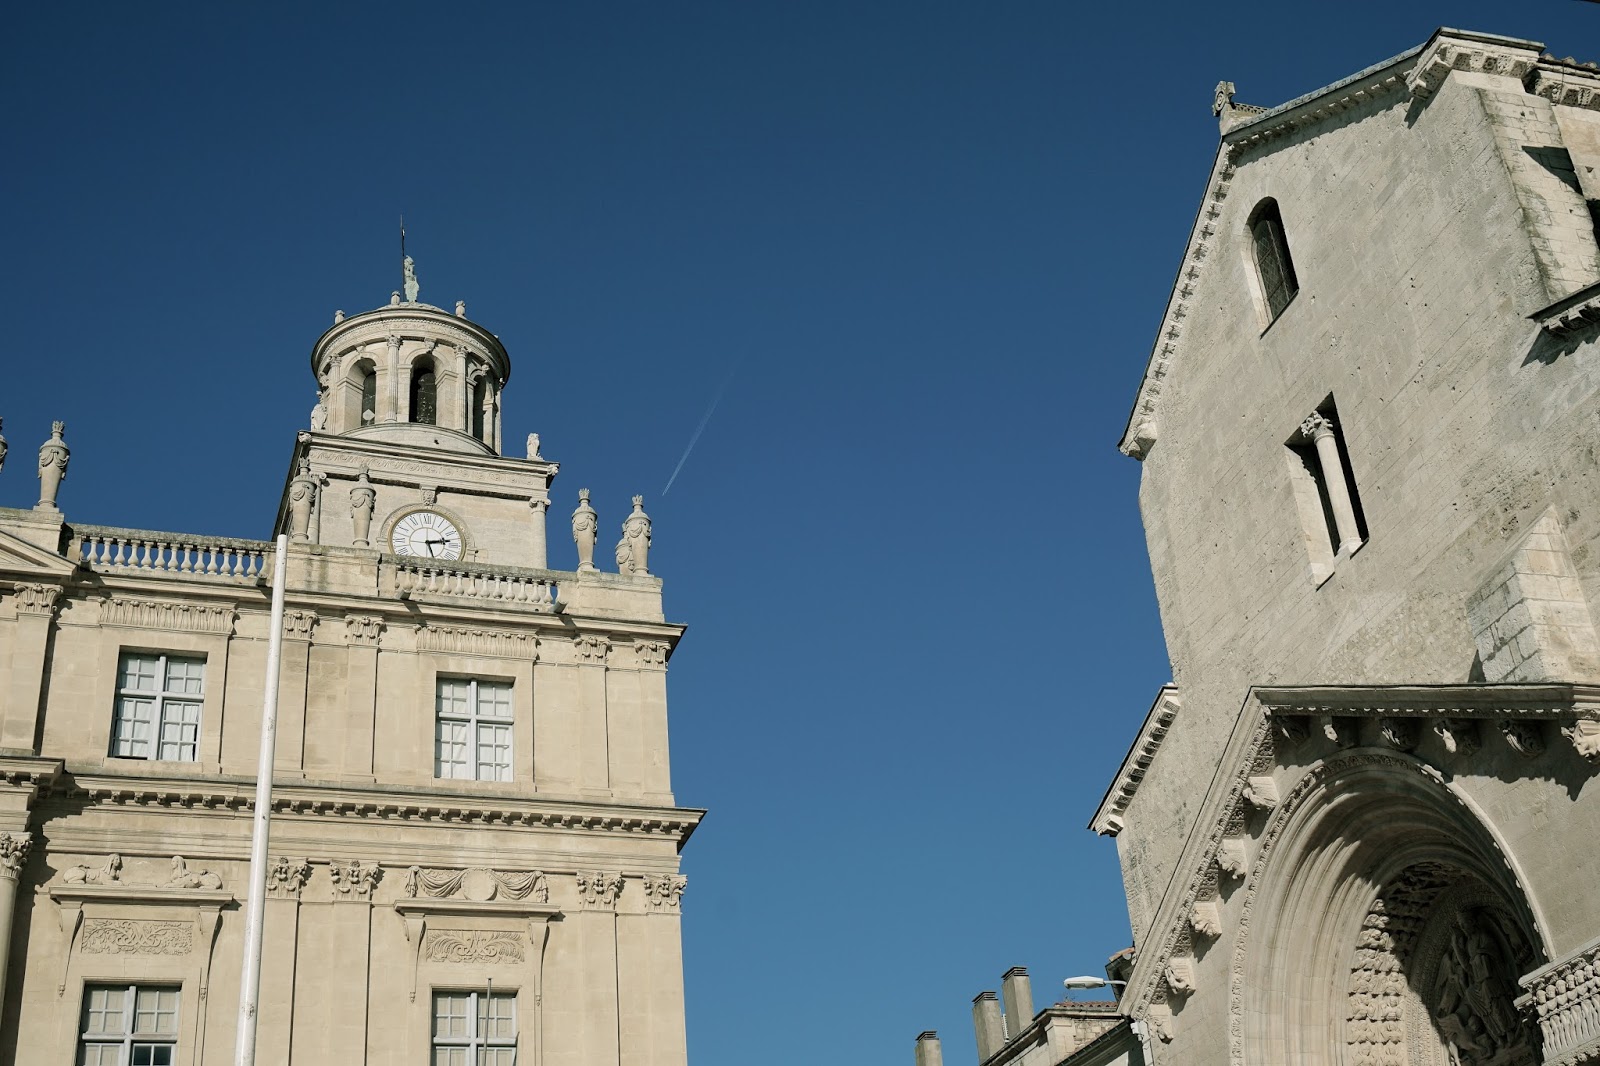 アルル市庁舎（Hôtel de ville d'Arles）